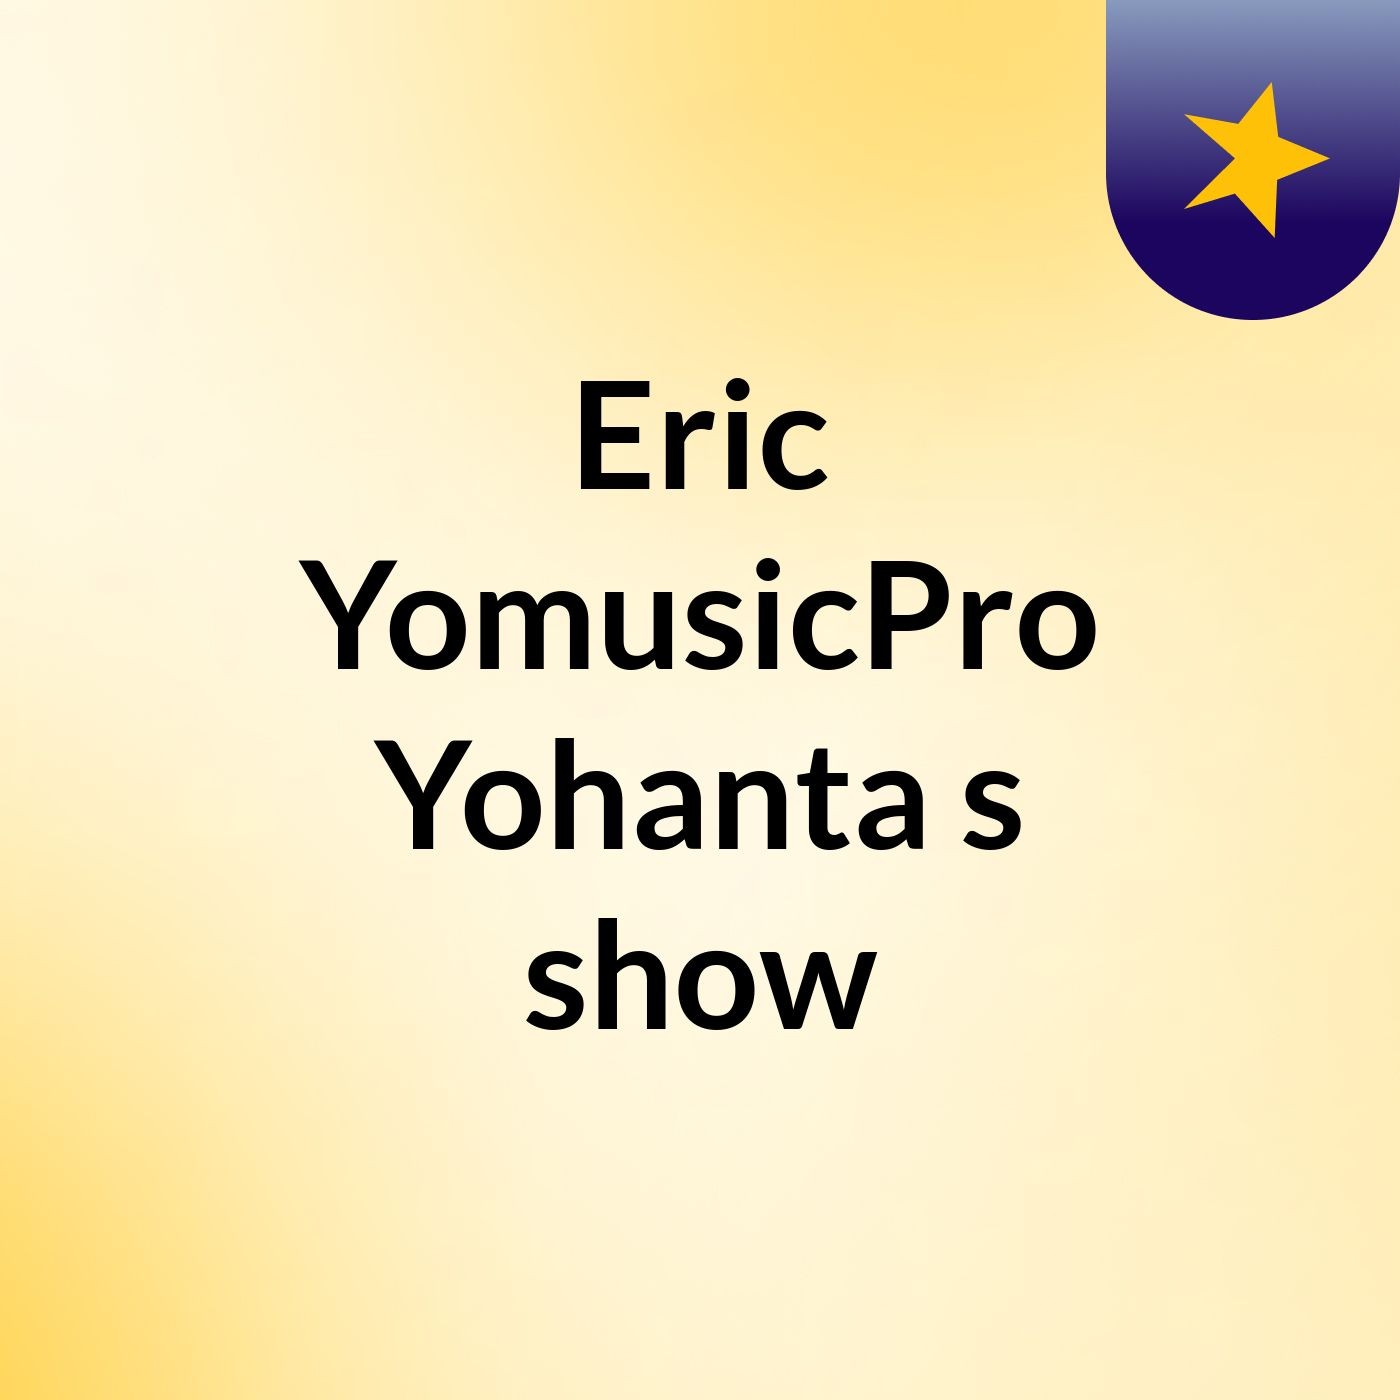 Eric YomusicPro Yohanta's show